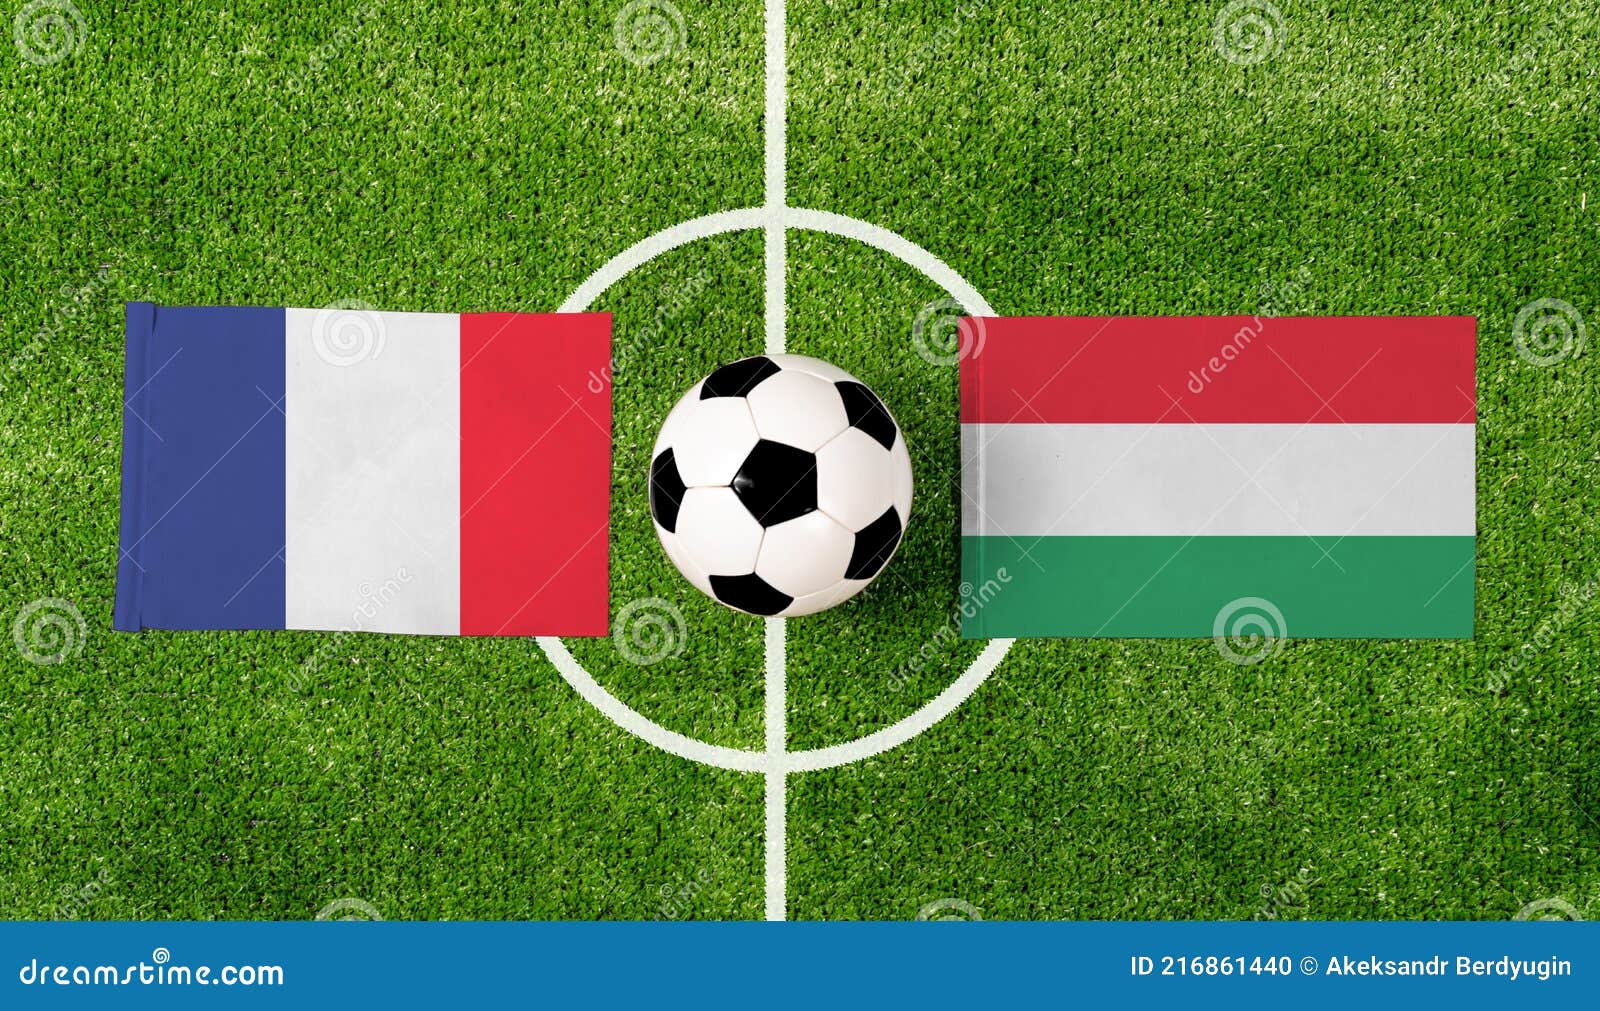 Hungary france vs